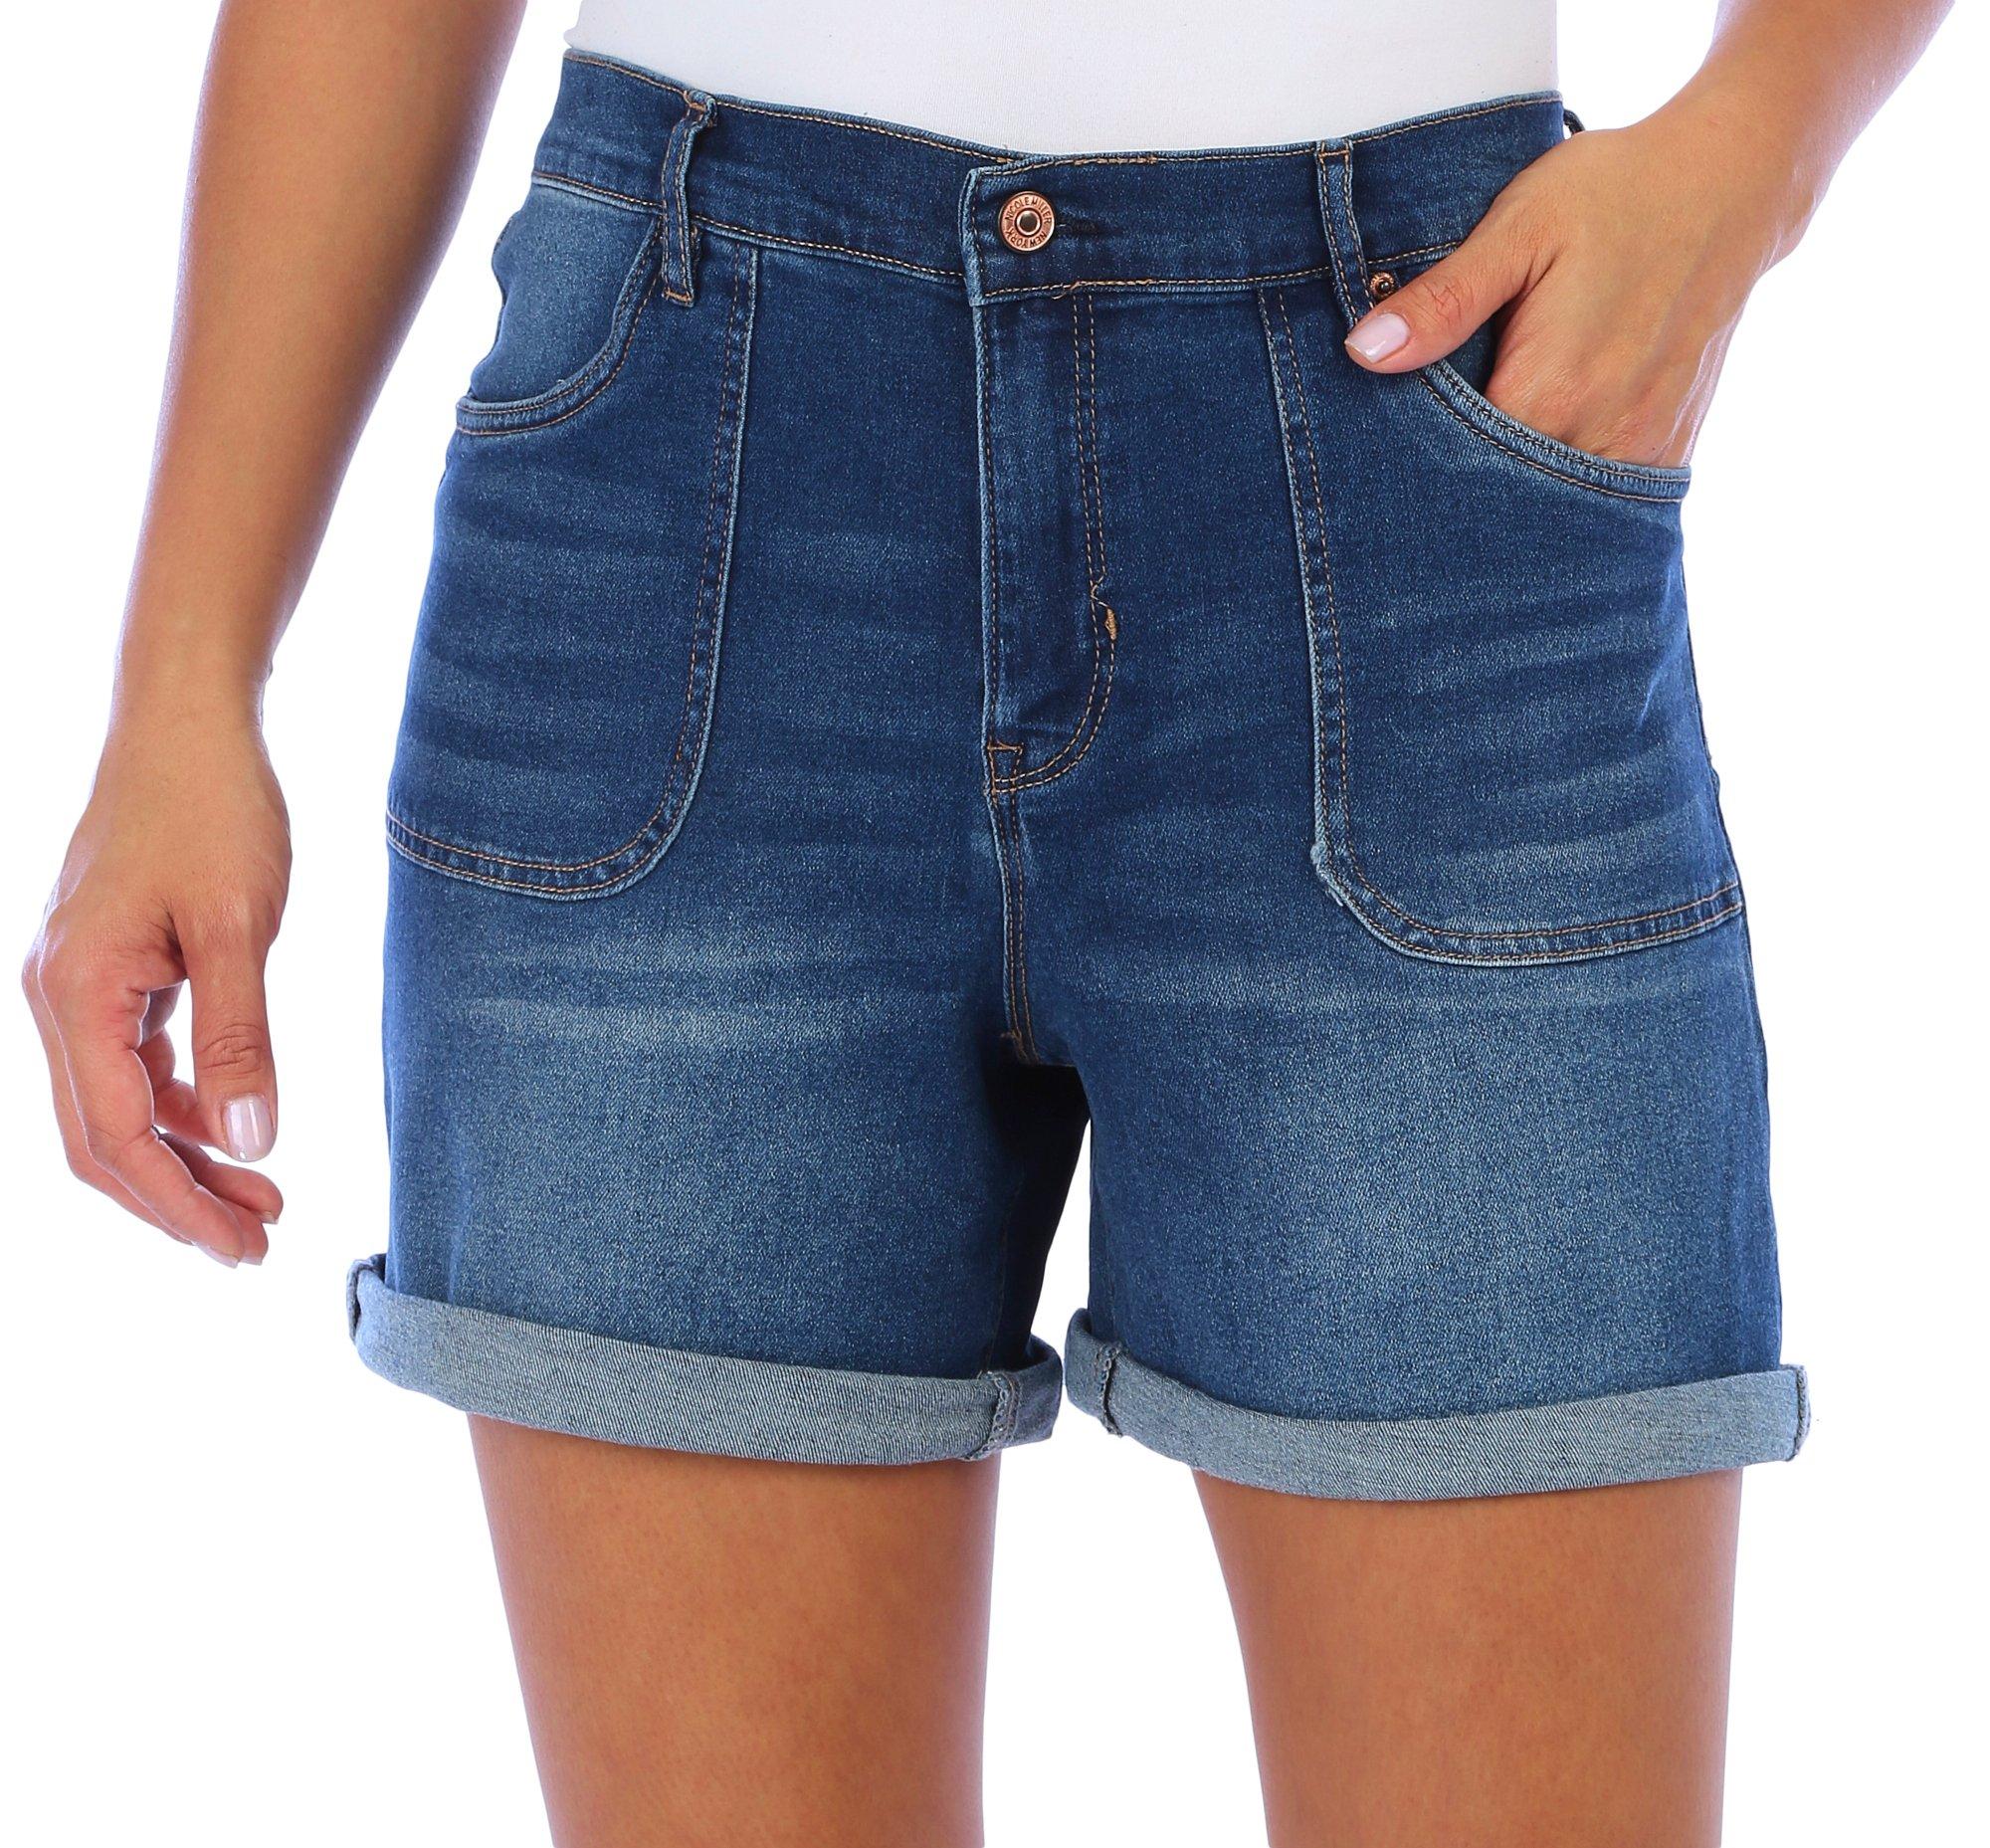 Nicole Miller Womens Cuffed Denim Shorts